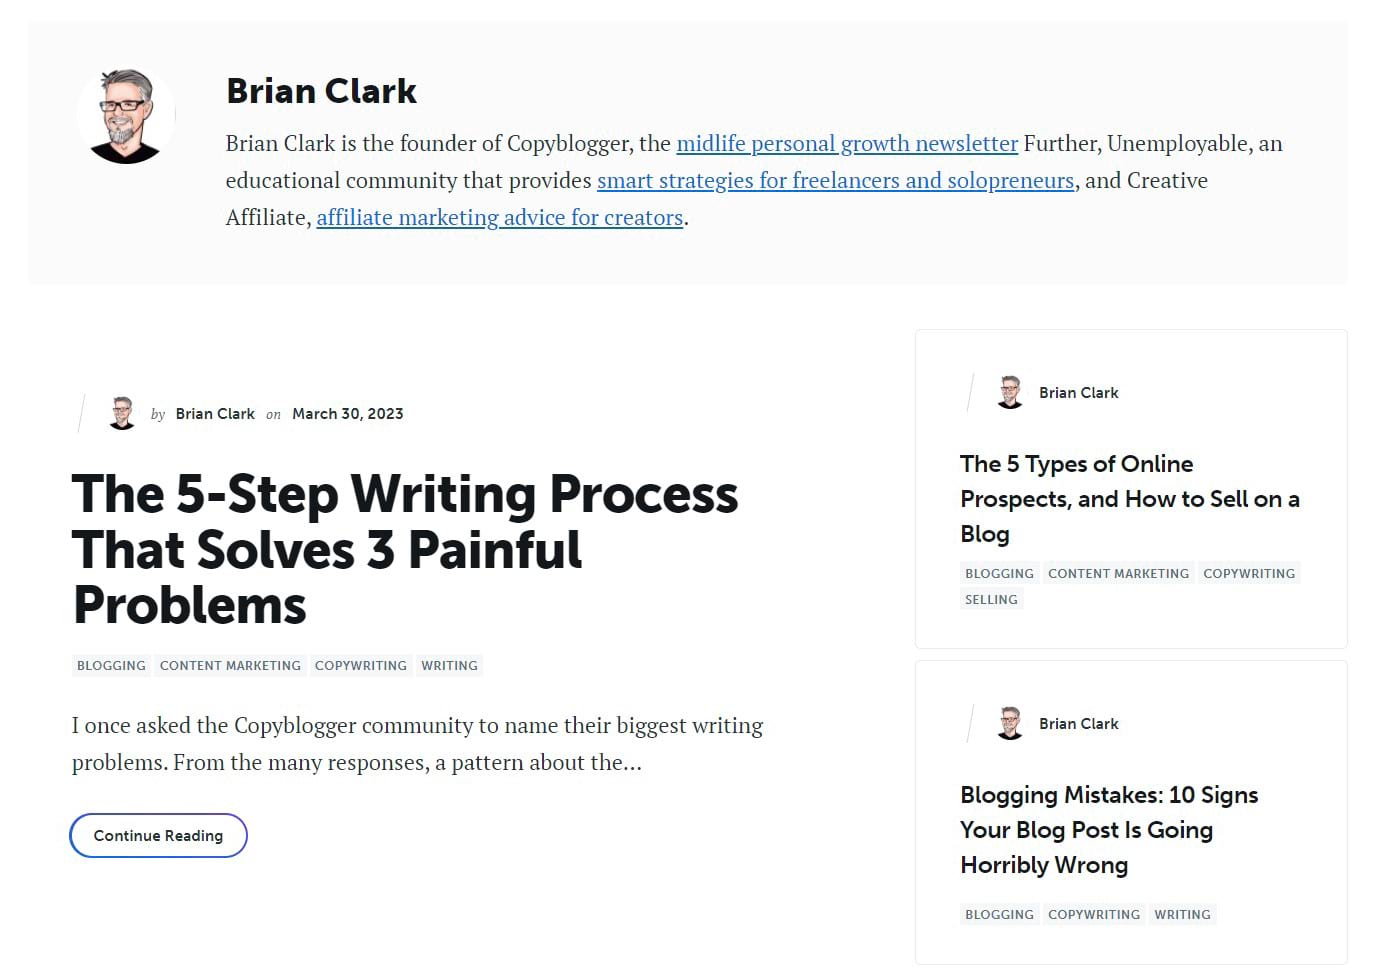 Brian Clark's blog on copywriting